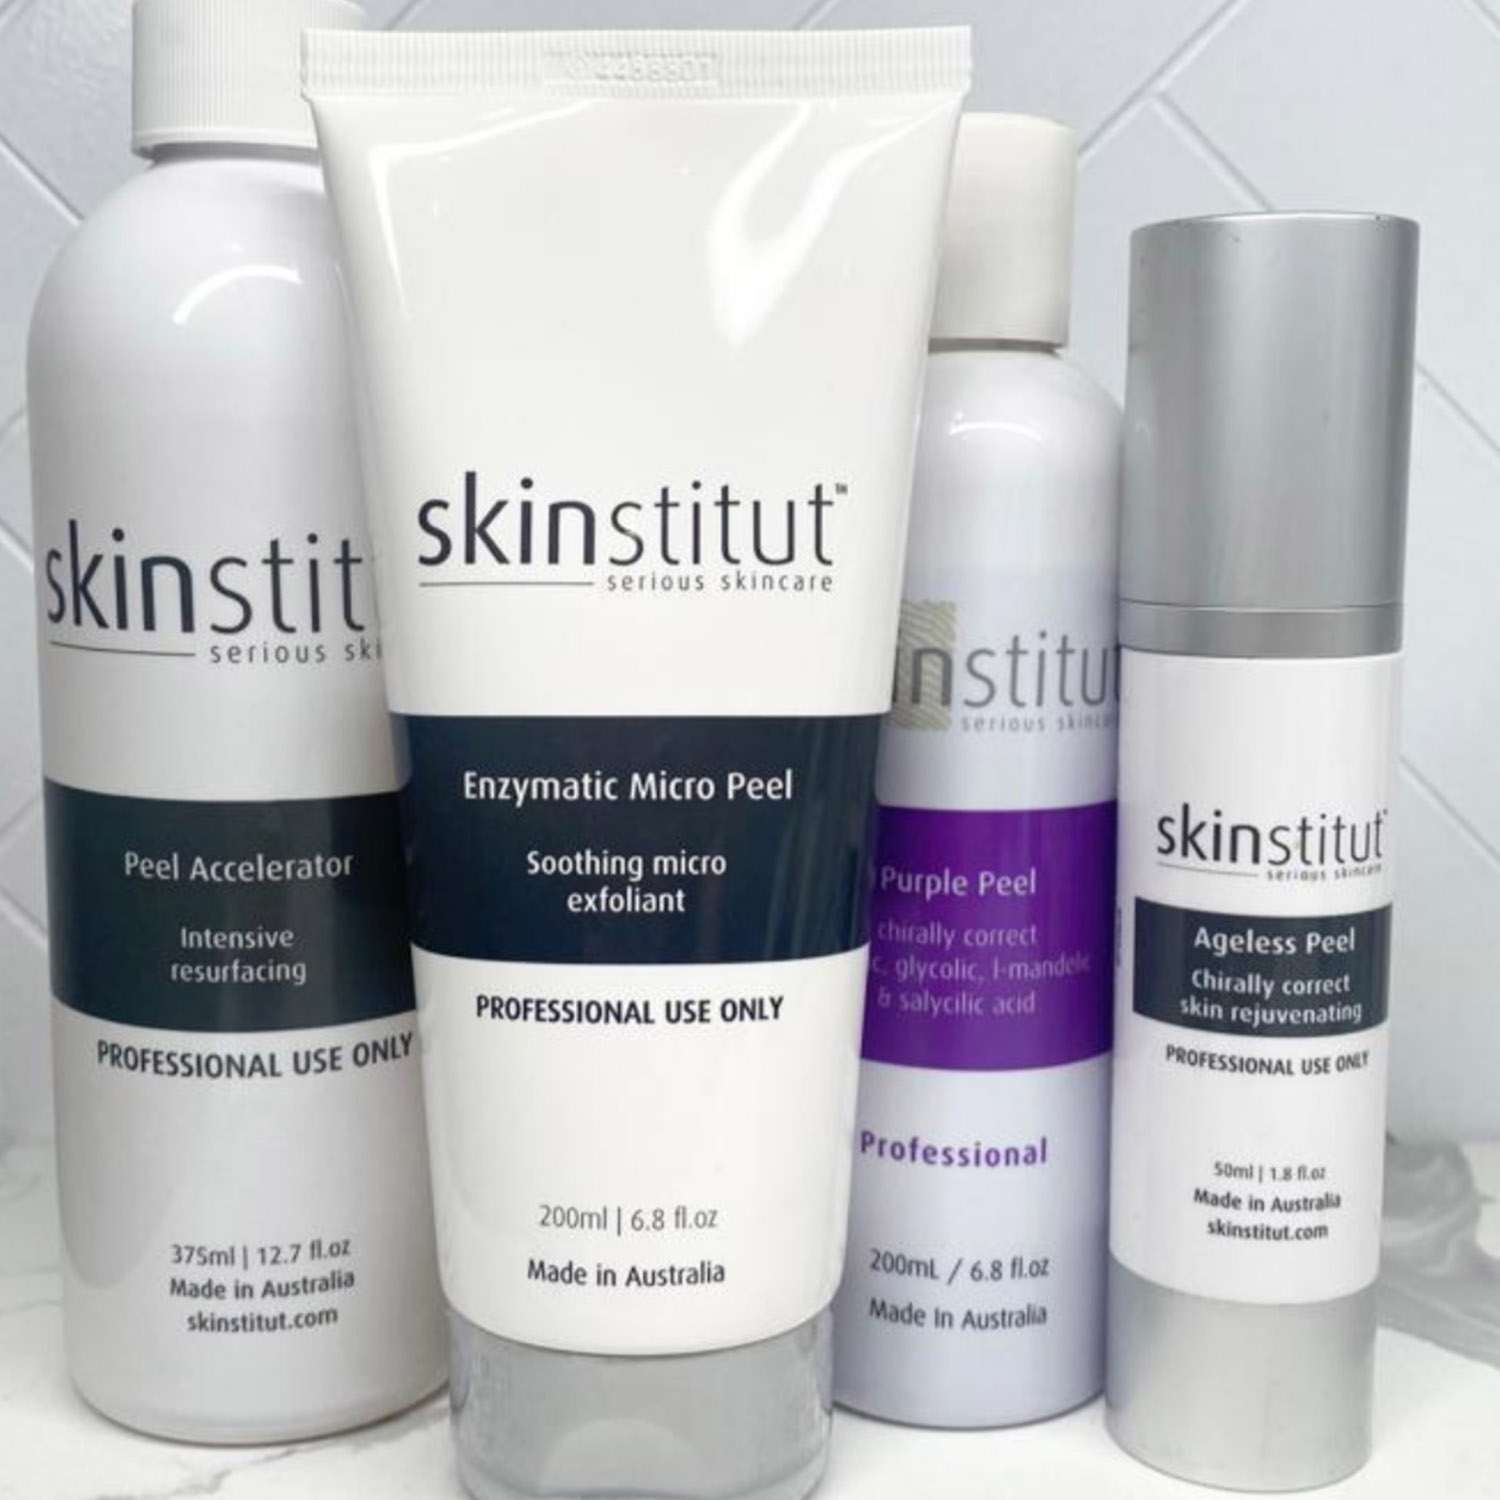 Skinstitut Peels treatment at Rejuvenate Laster & Skin Clinic